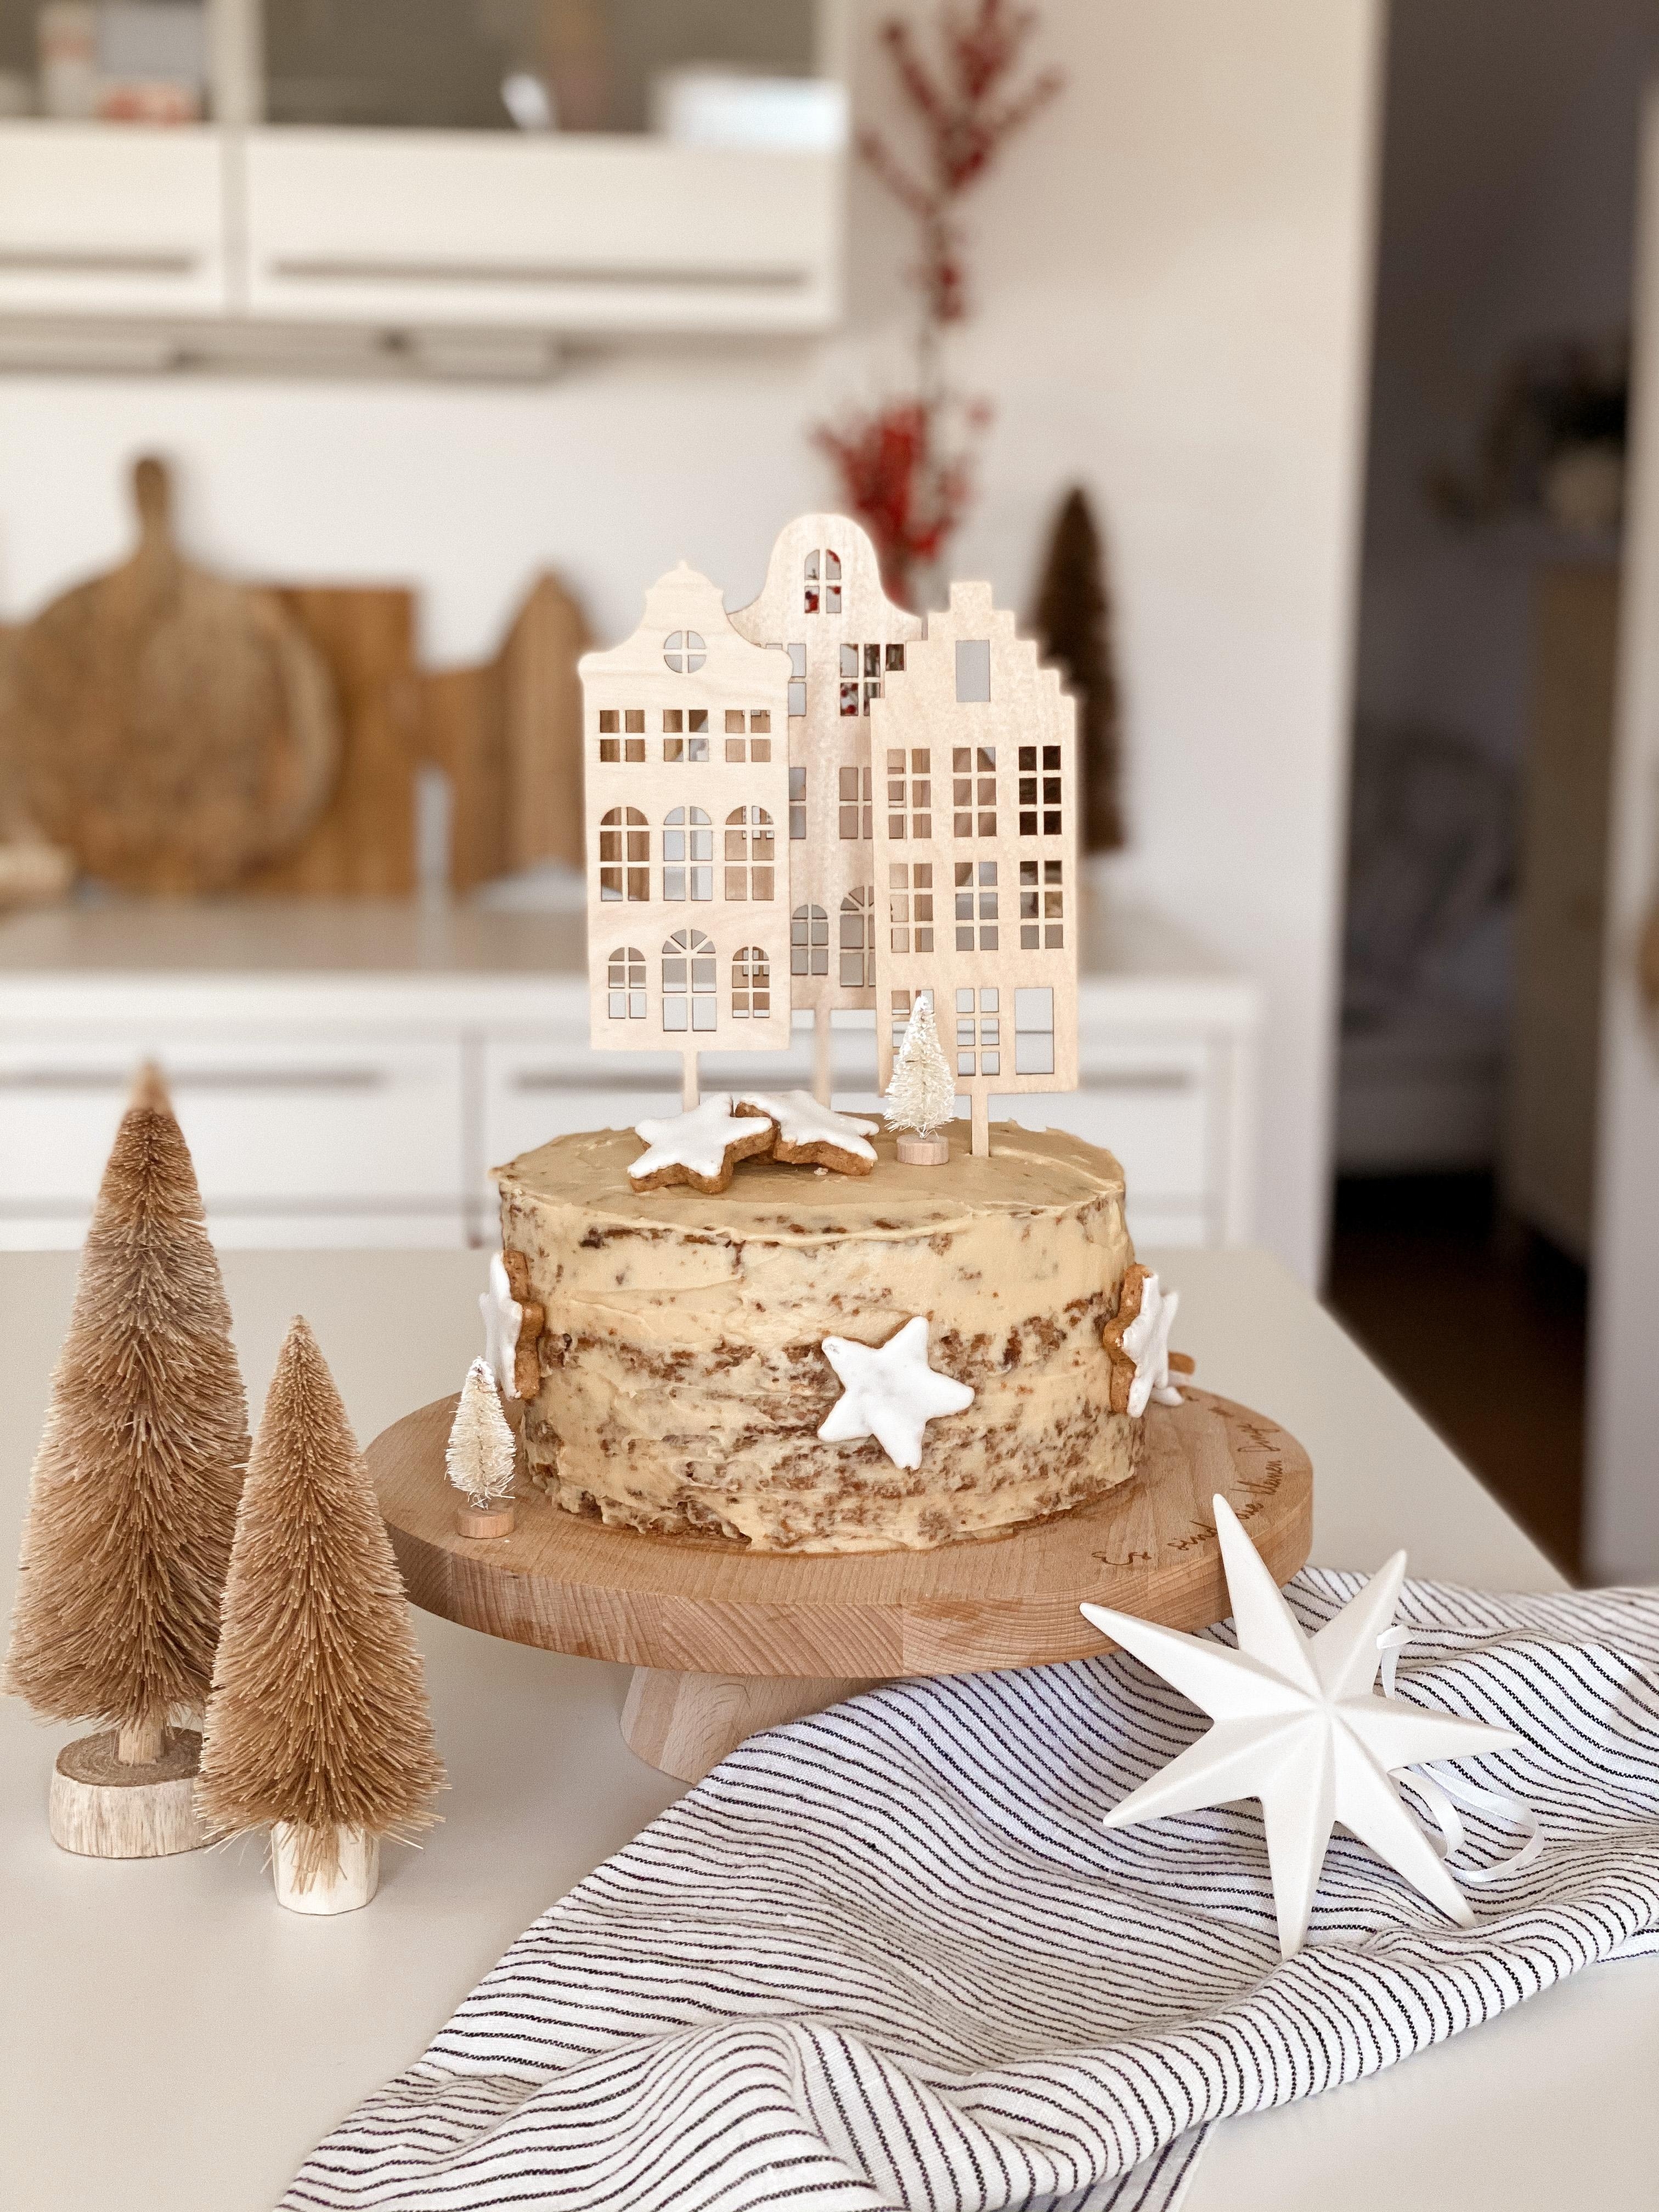 #christmascake #weihnachtskuchen #kuchen #torte #lebkuchen #sweet